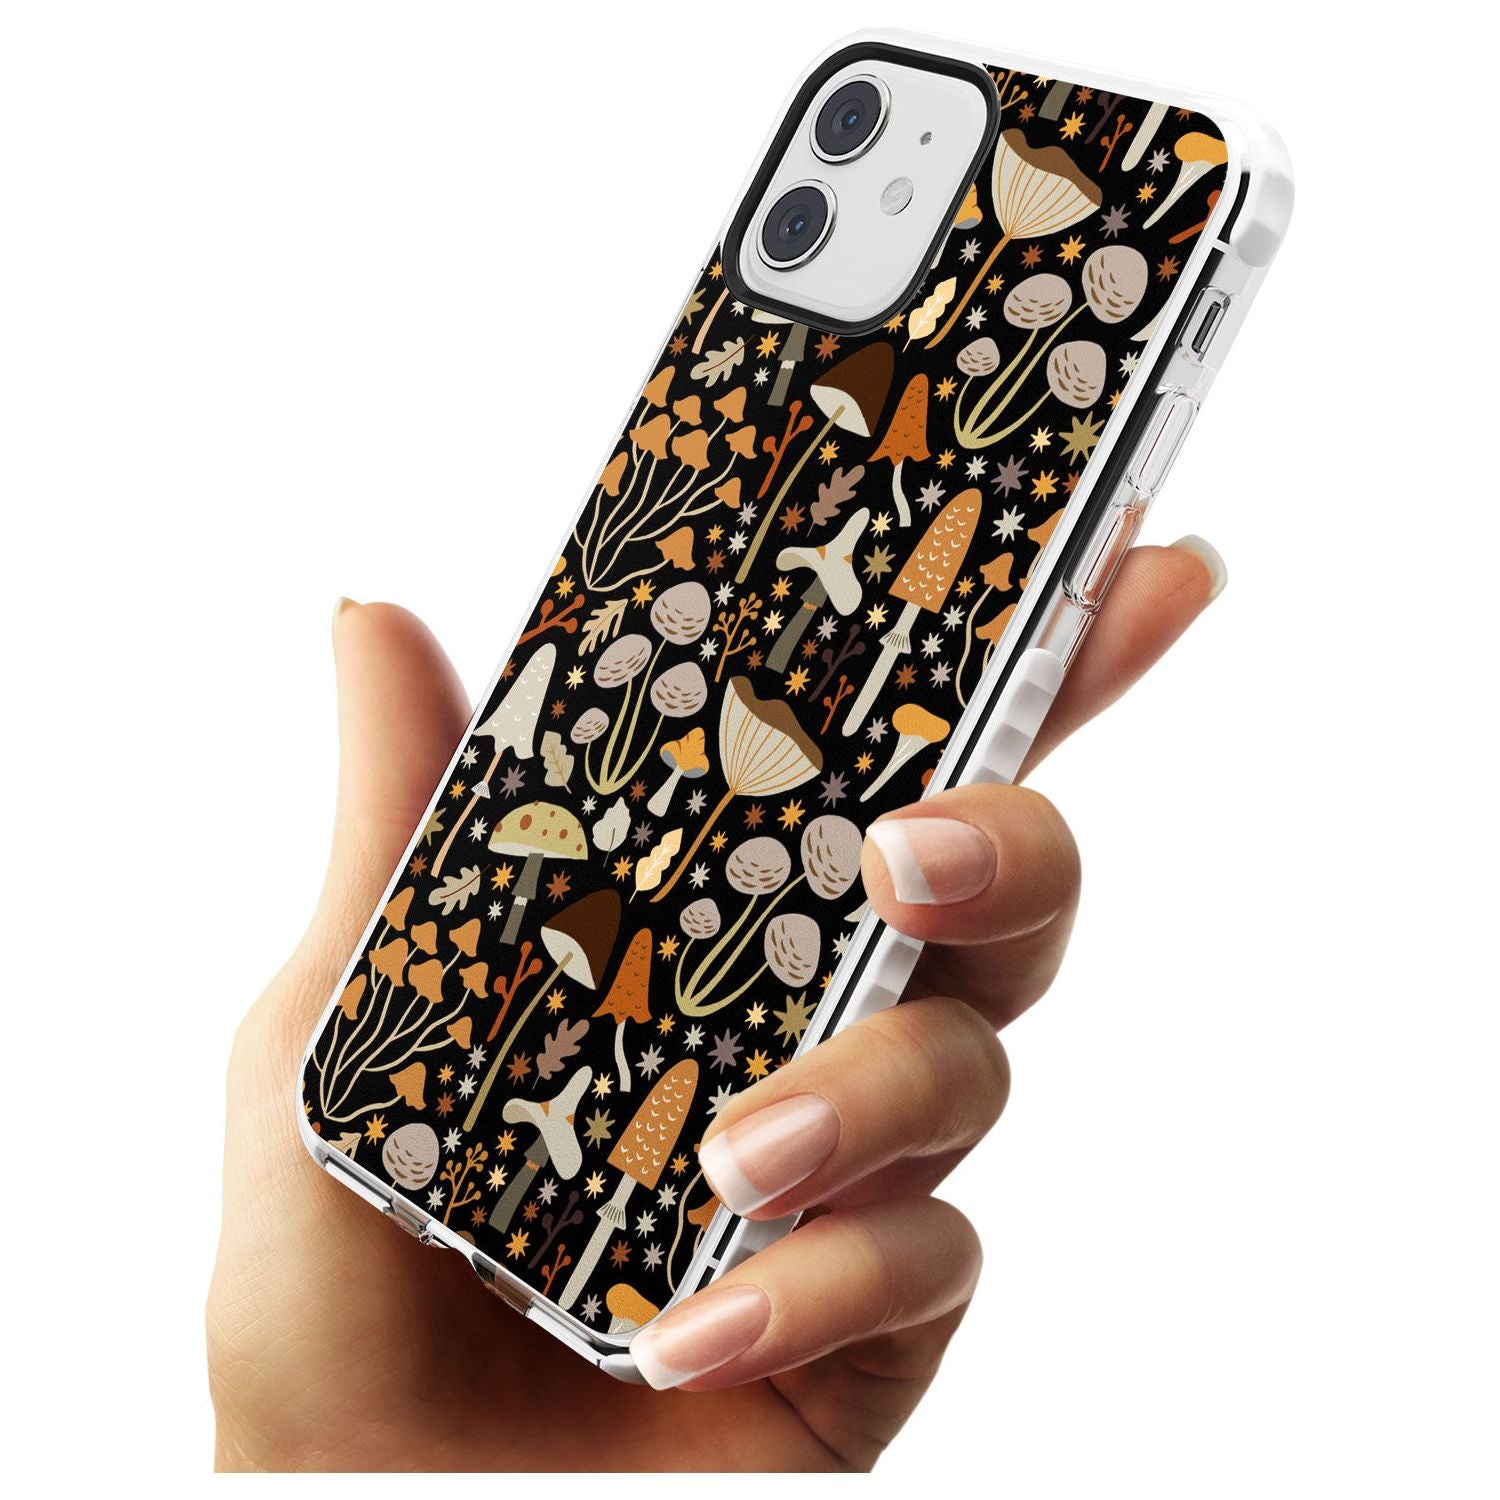 Sentimental Mushrooms Pattern Impact Phone Case for iPhone 11